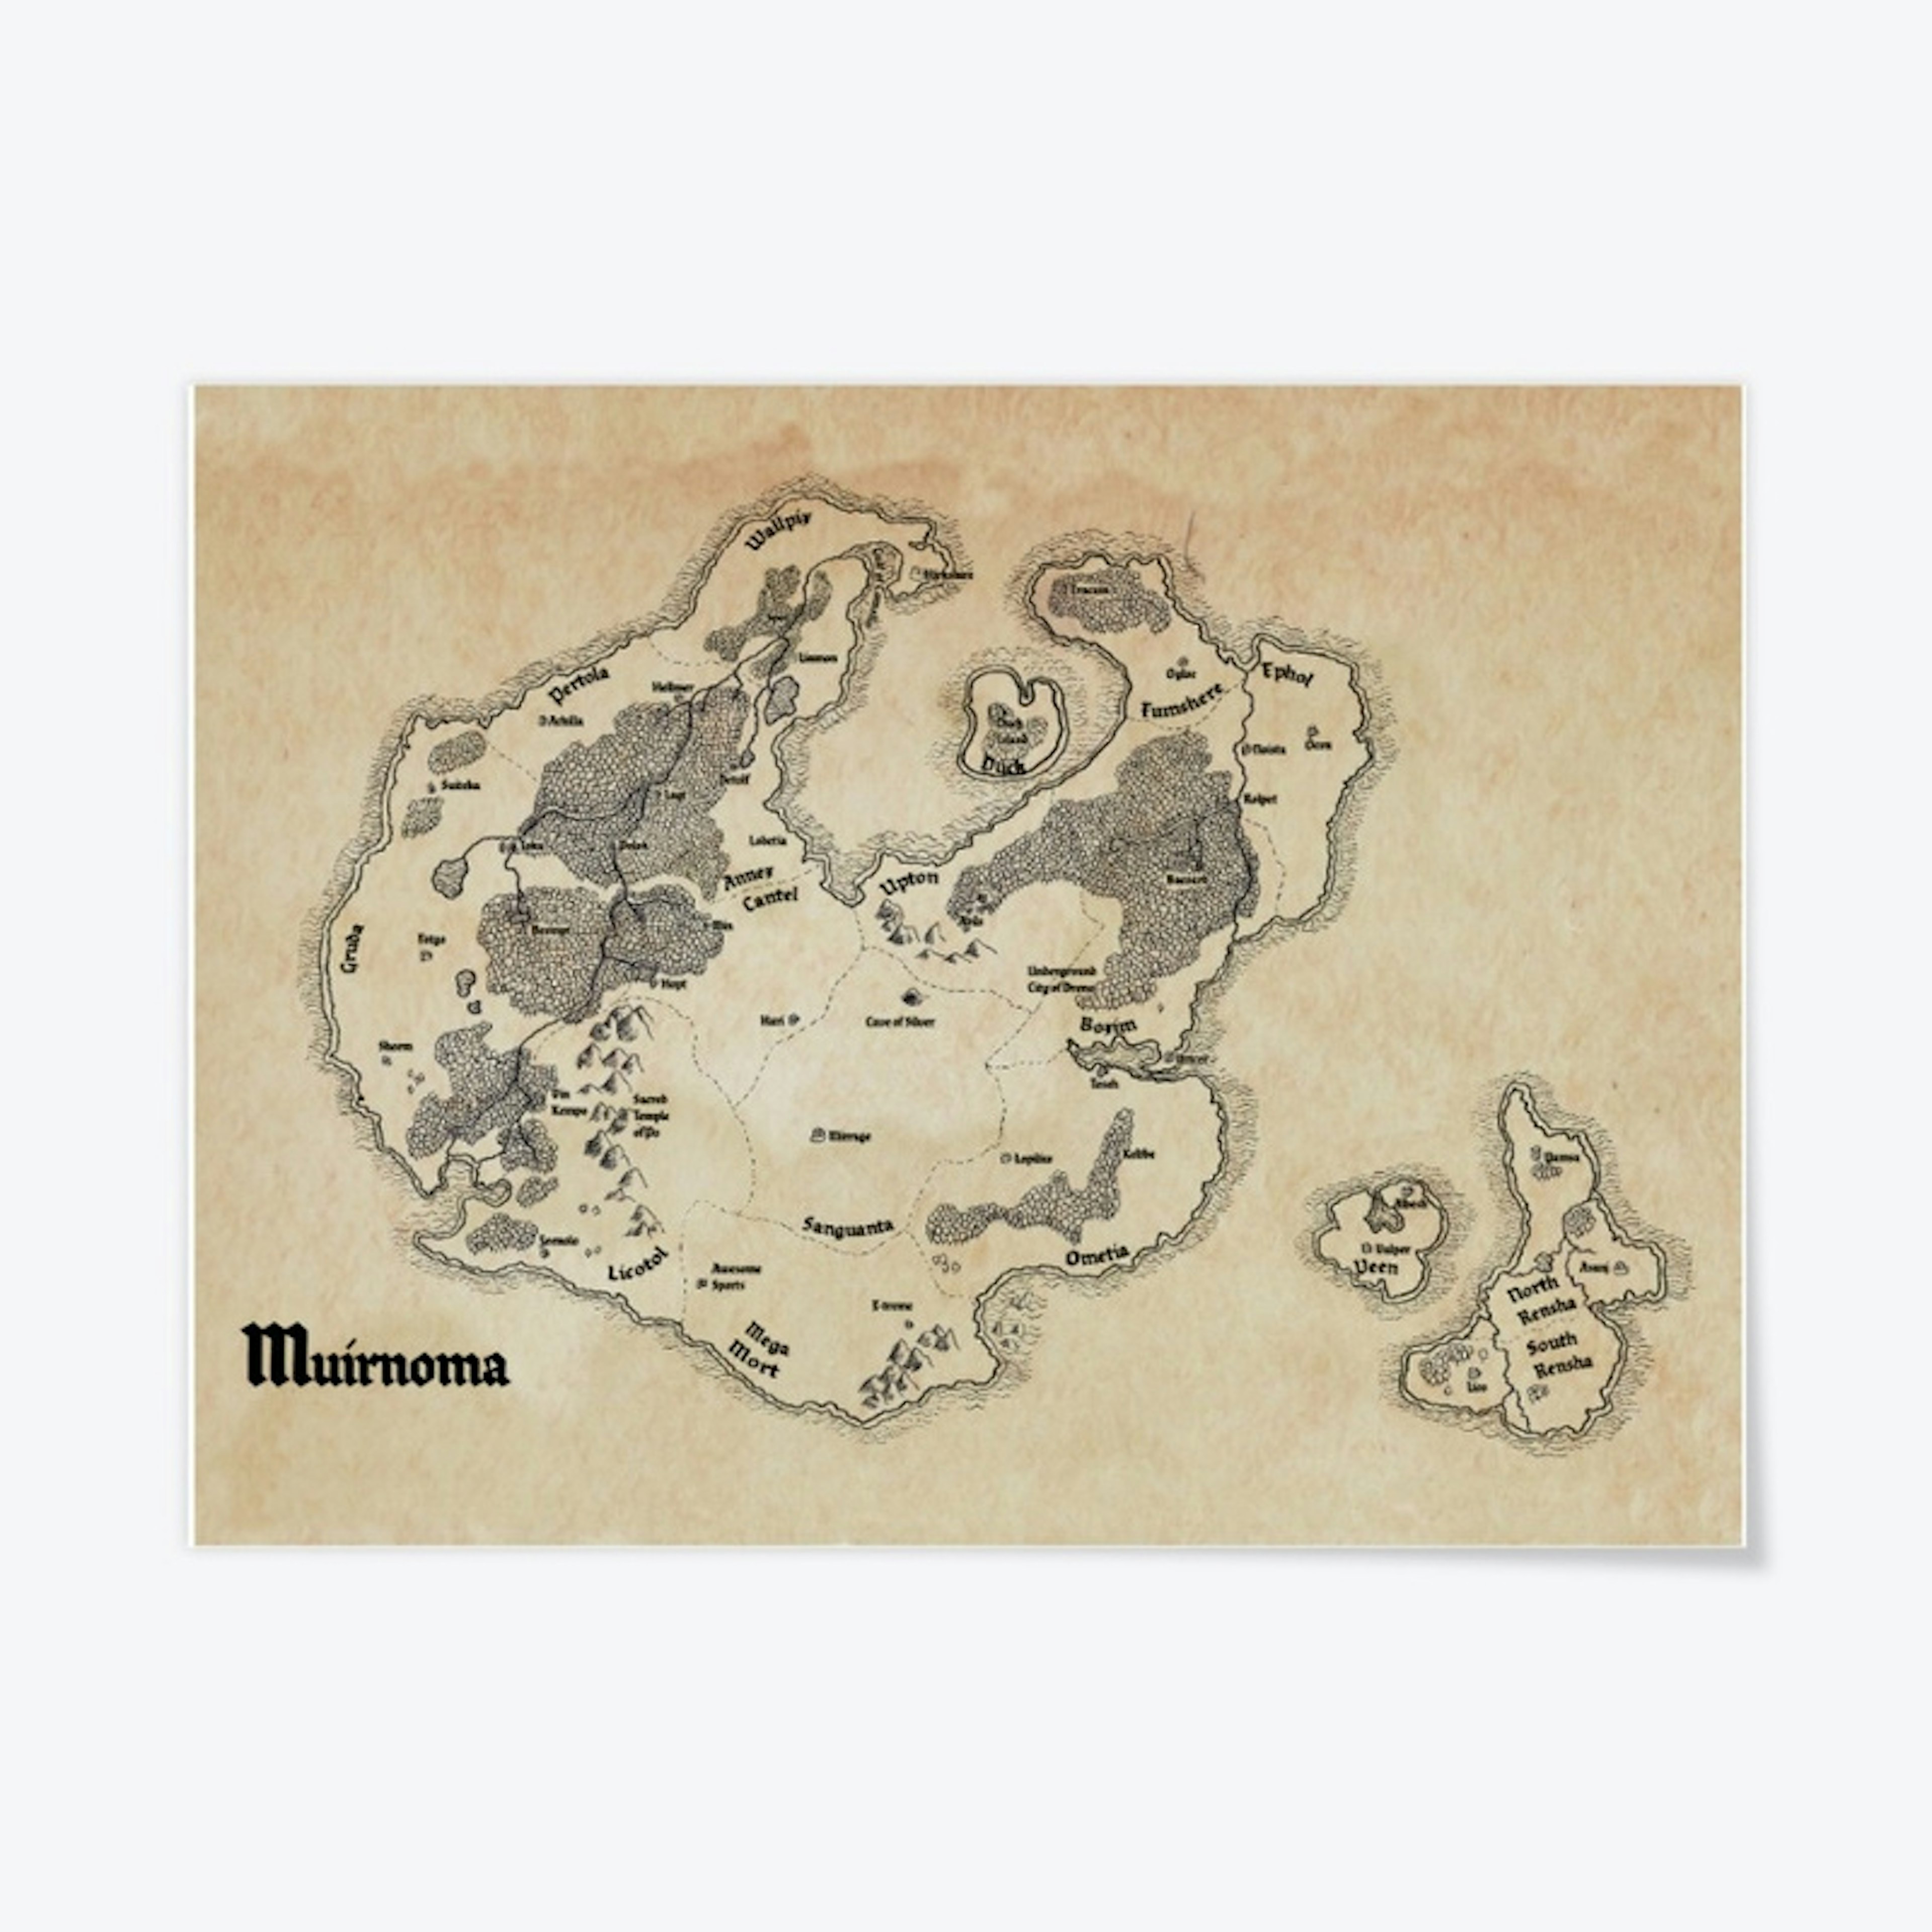 Muirnoma Map - Corvidae